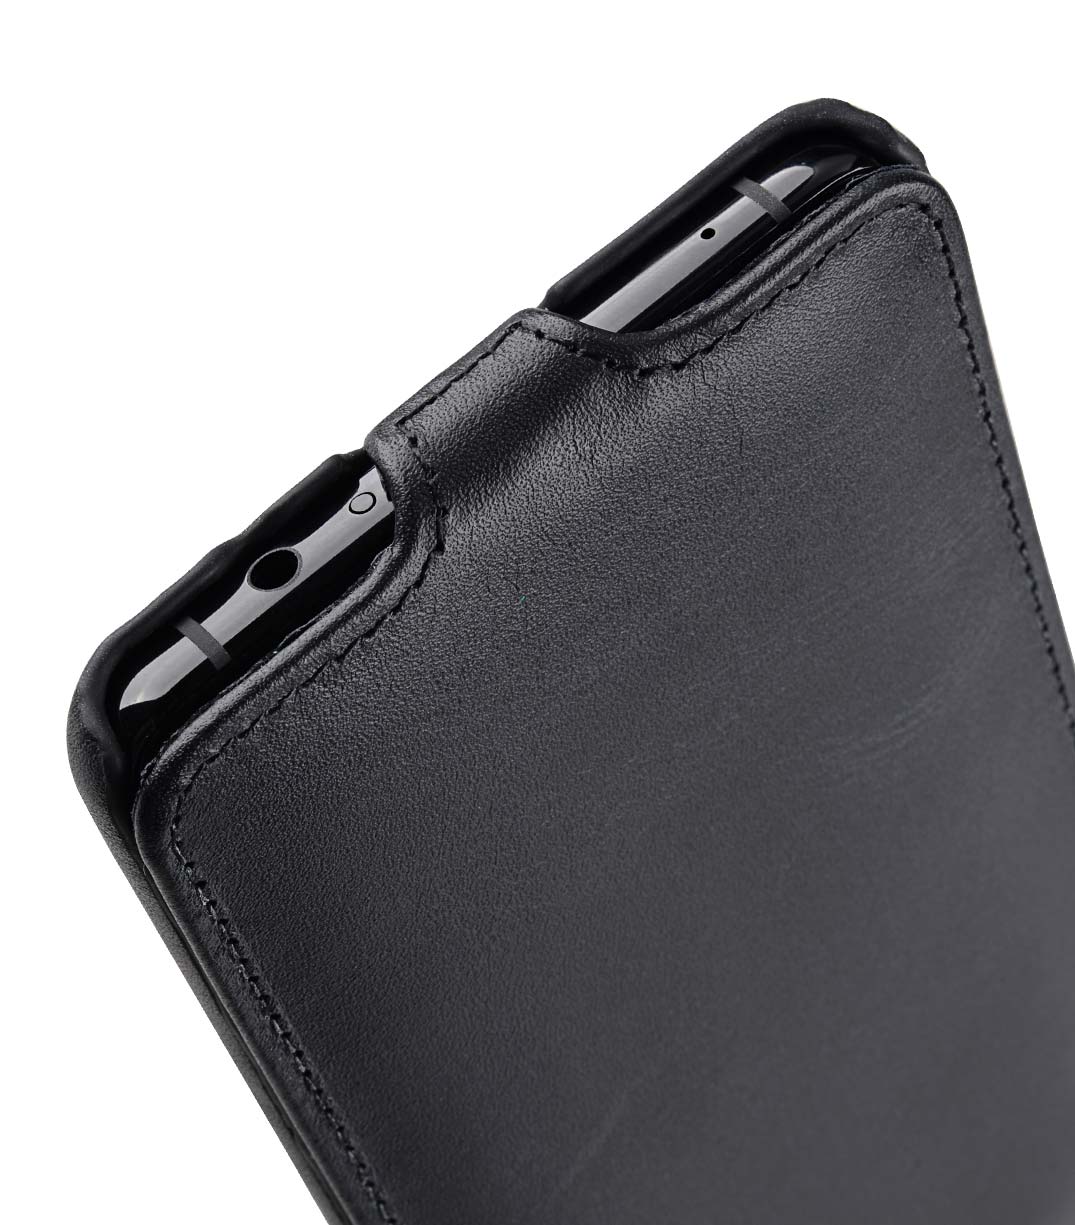 Melkco Premium Leather Case for Huawei Mate 10 - Jacka Type (Black)